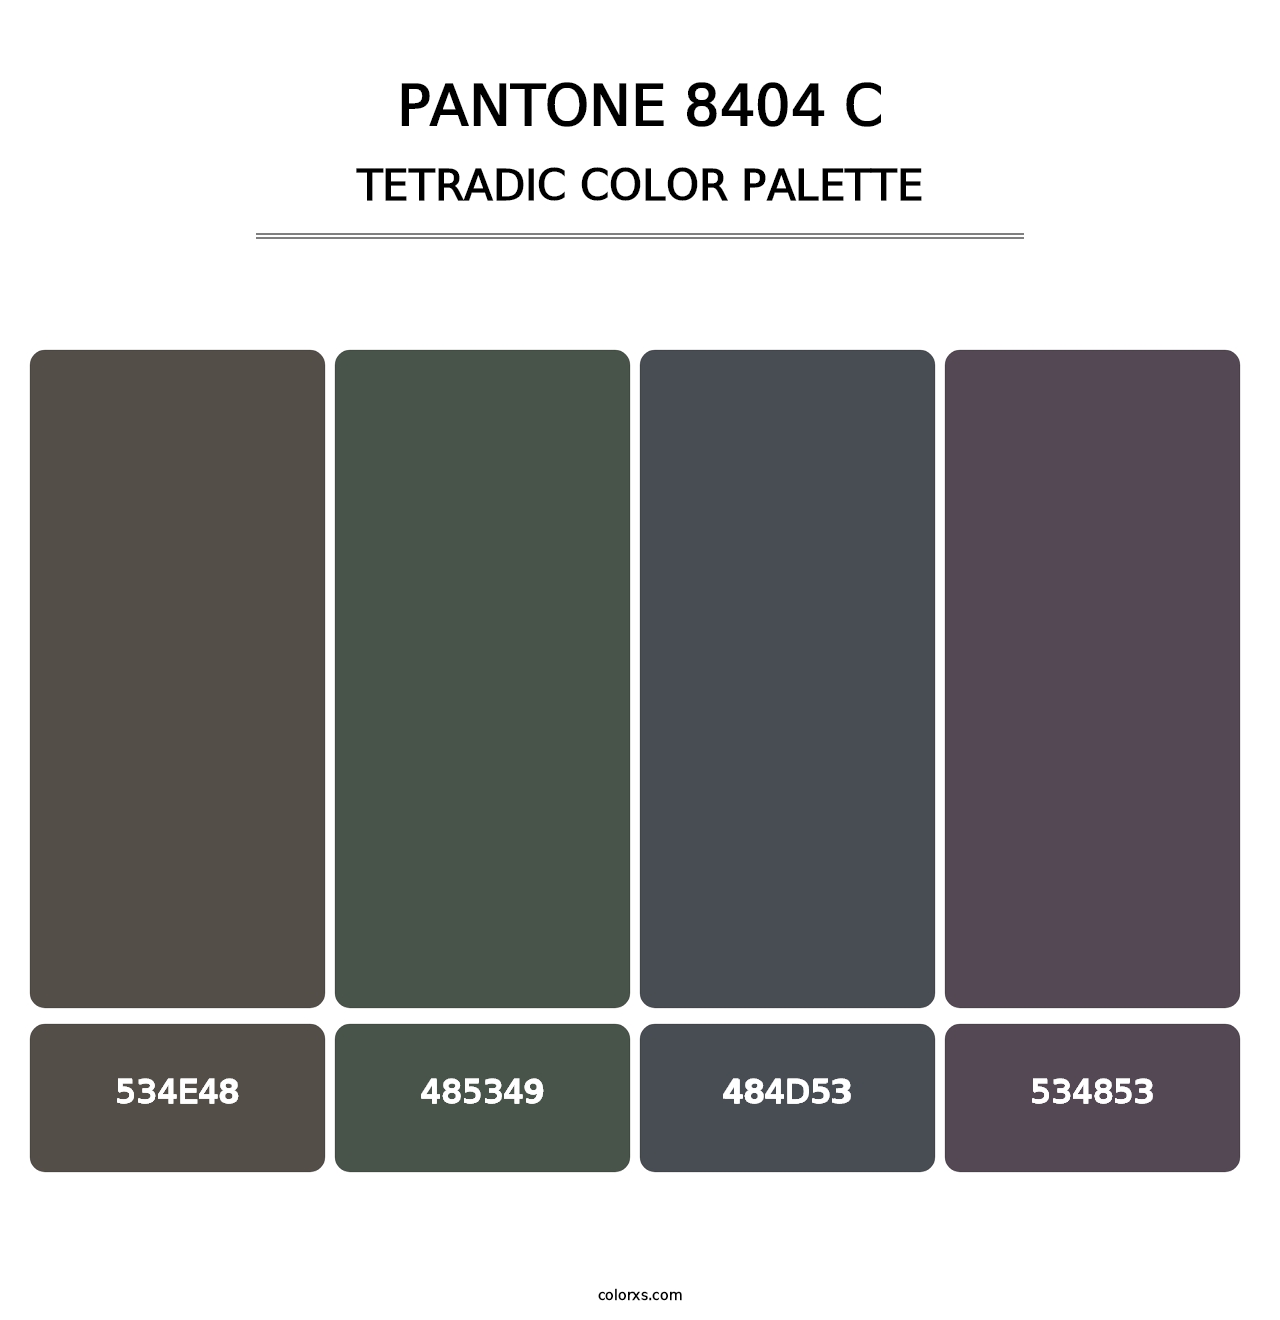 PANTONE 8404 C - Tetradic Color Palette